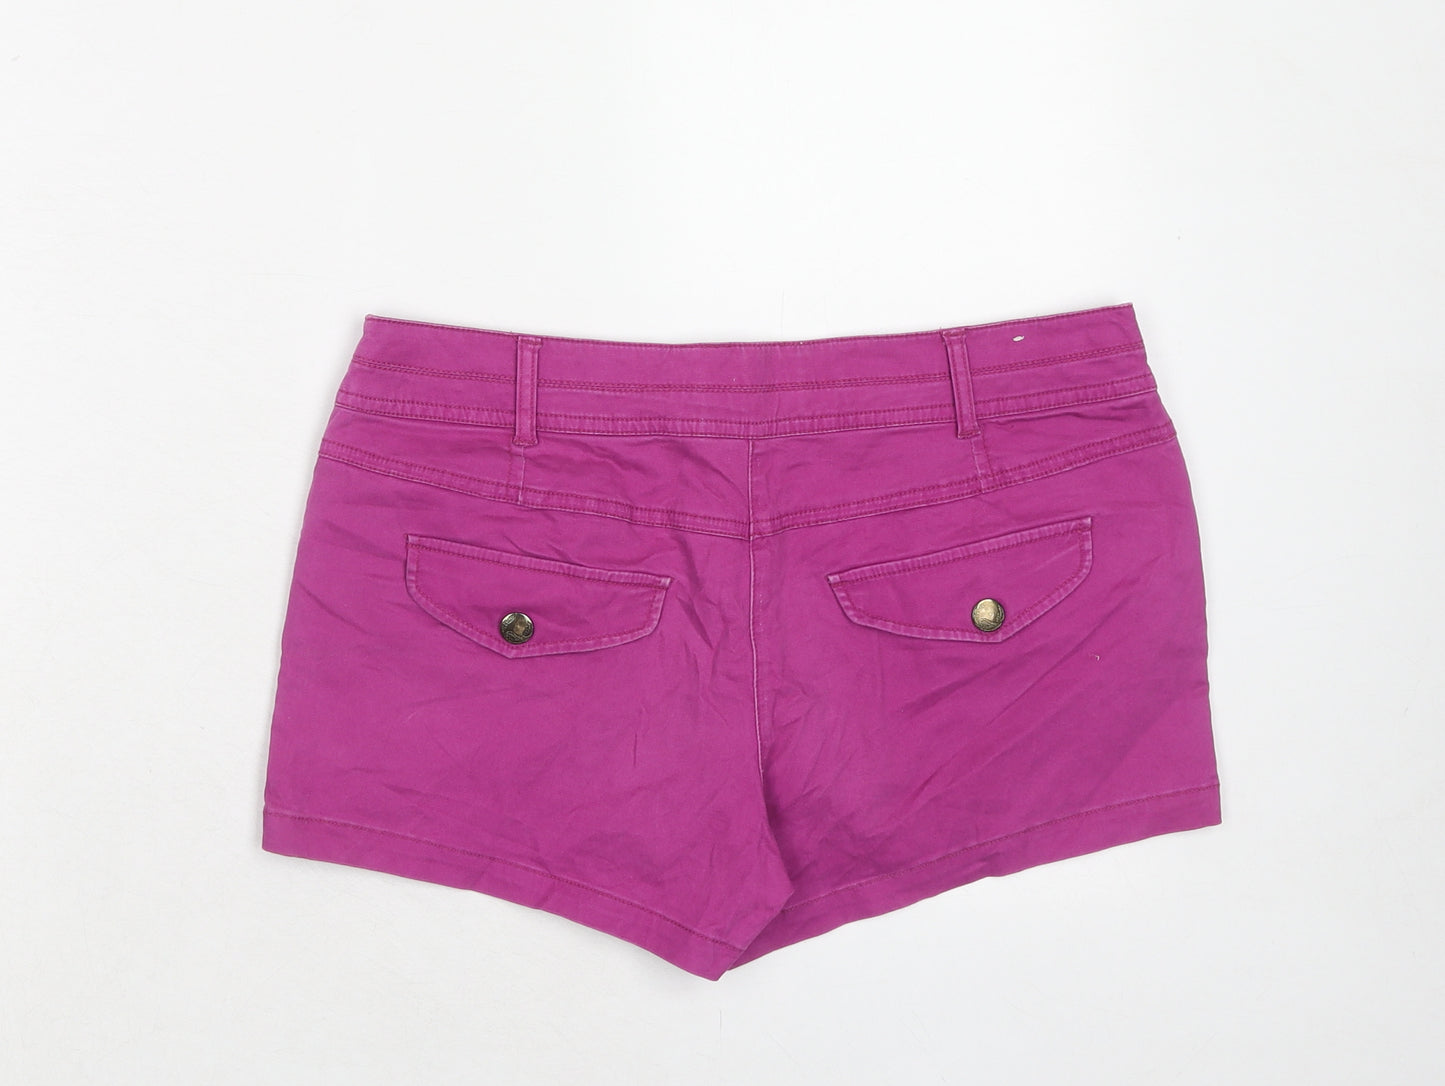 New Look Womens Purple Cotton Hot Pants Shorts Size 12 Regular Zip